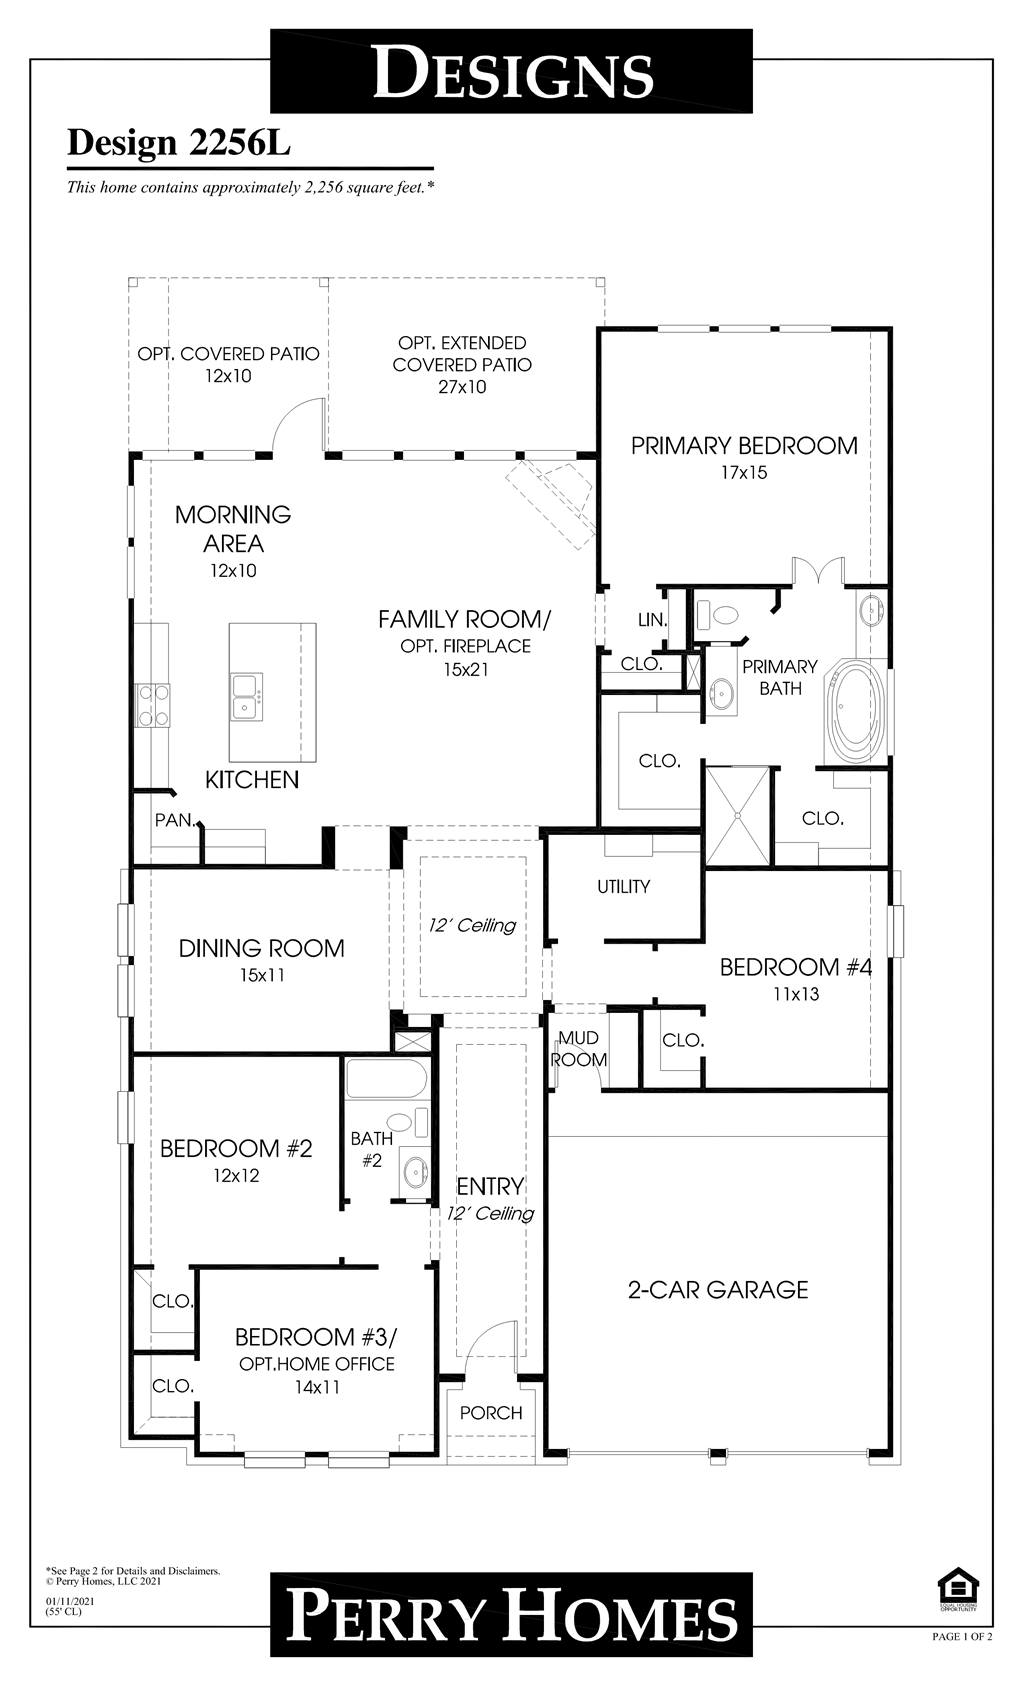 Floor Plan for 2256L